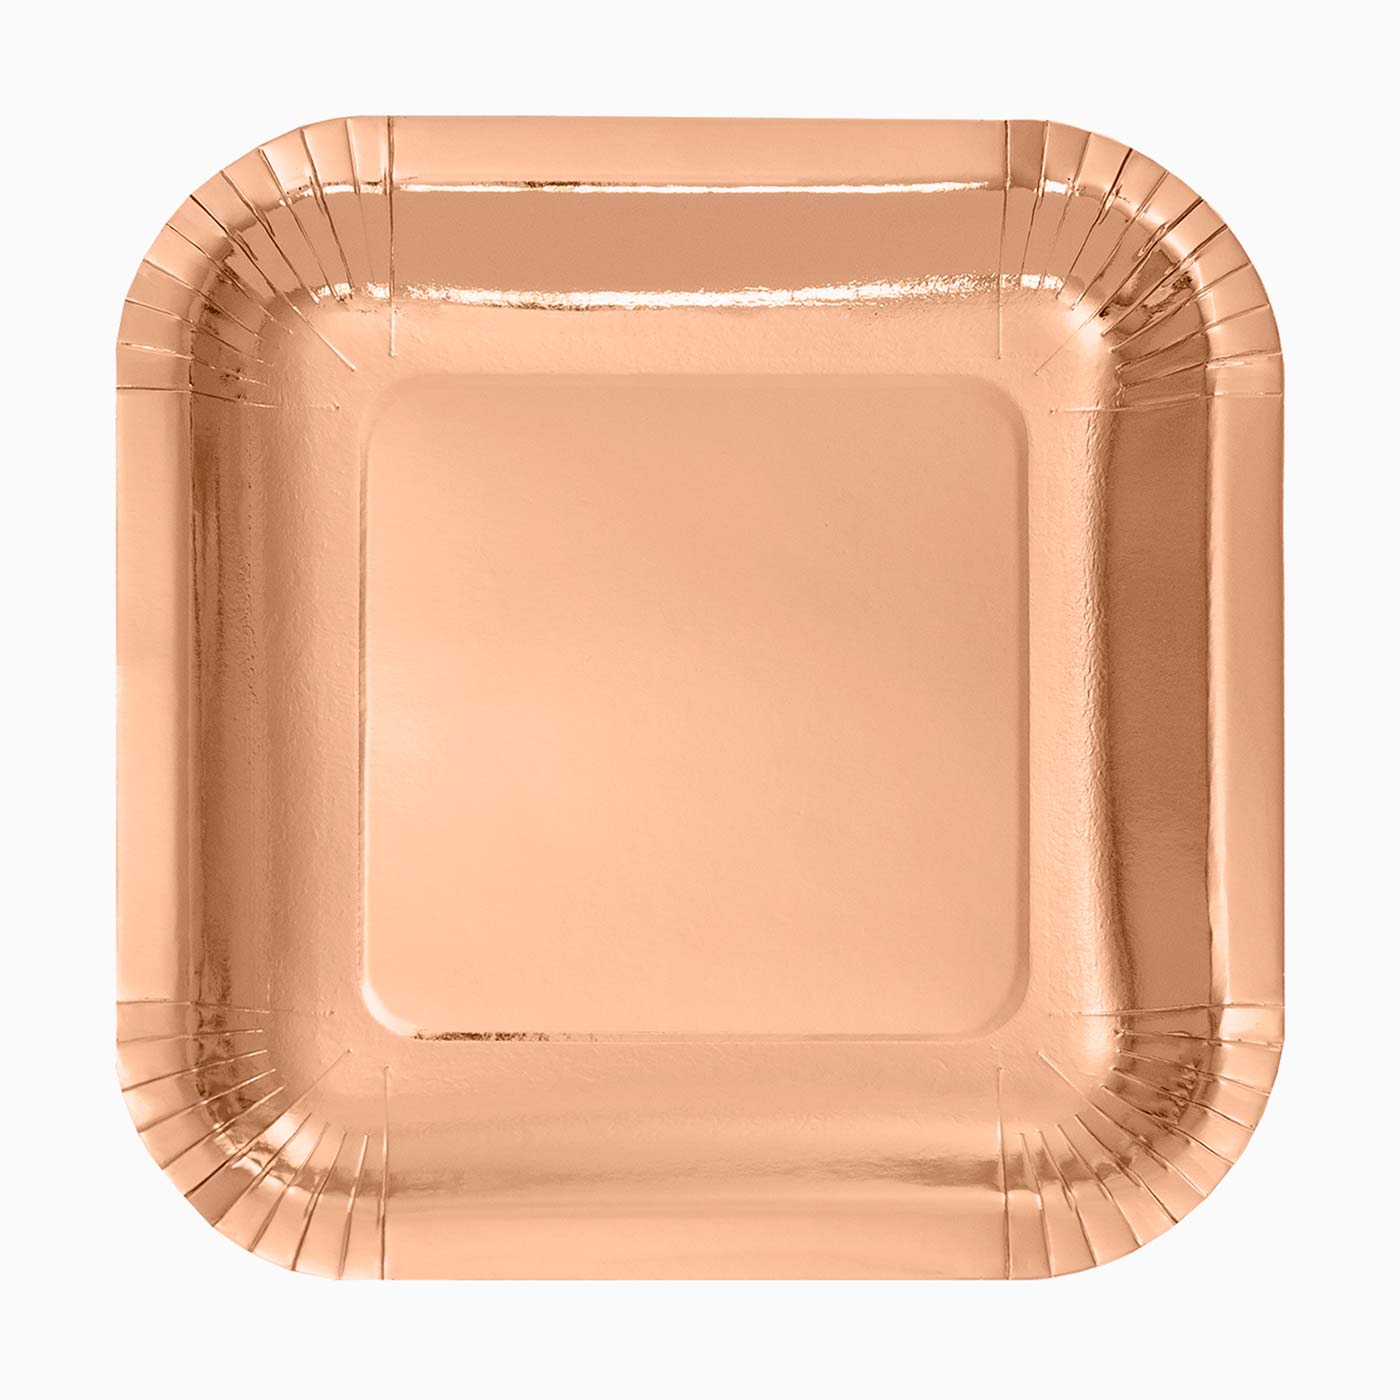 Piastra di cartone quadrata metallica 26 x 26 cm oro rosa